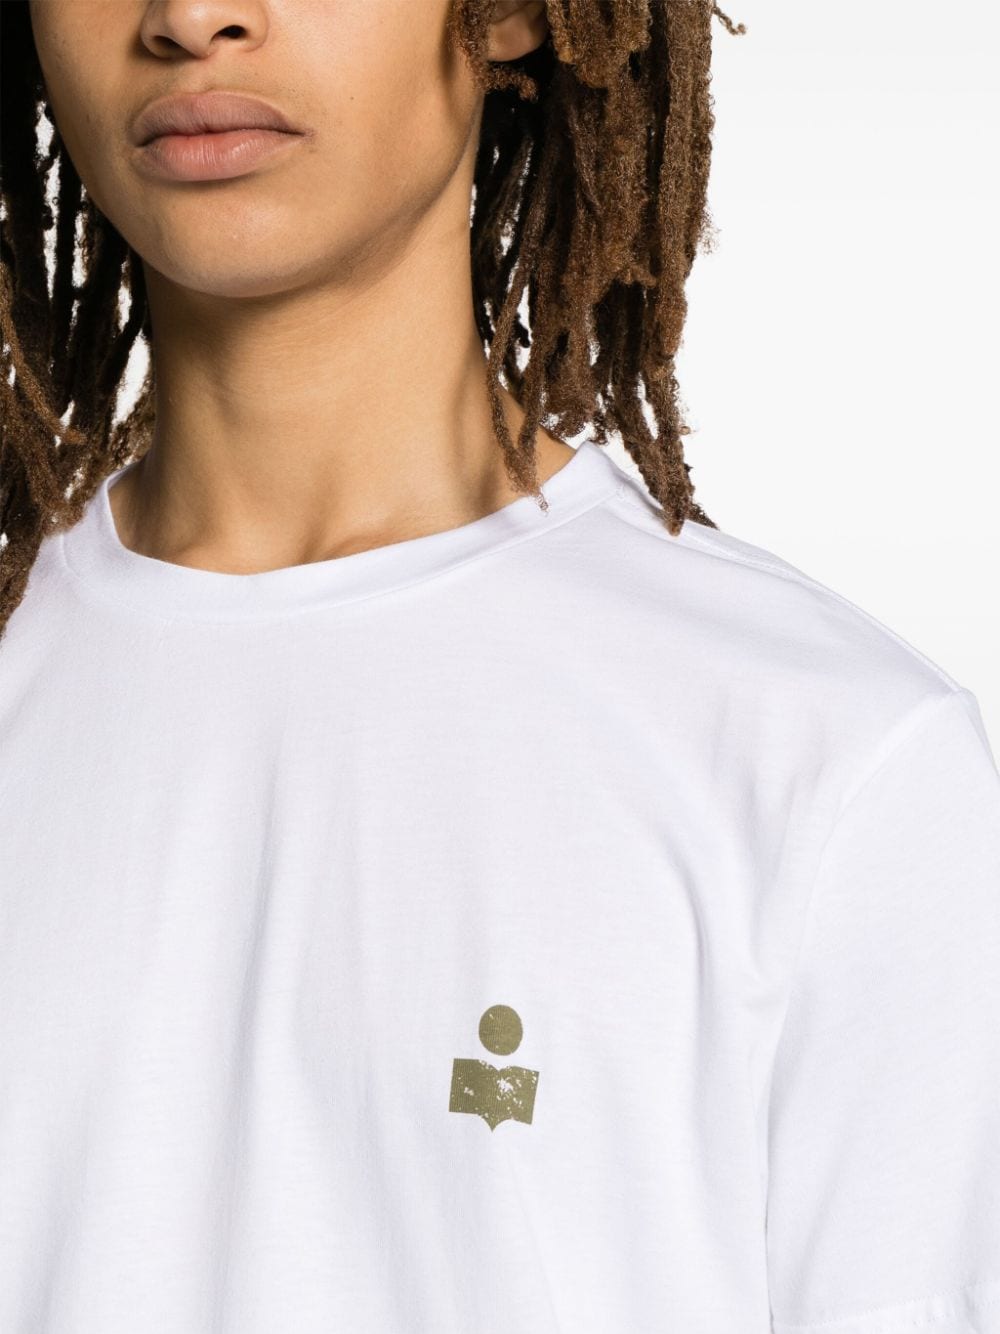 T-shirt in cotone biologico con stampa logo<br><br><br>